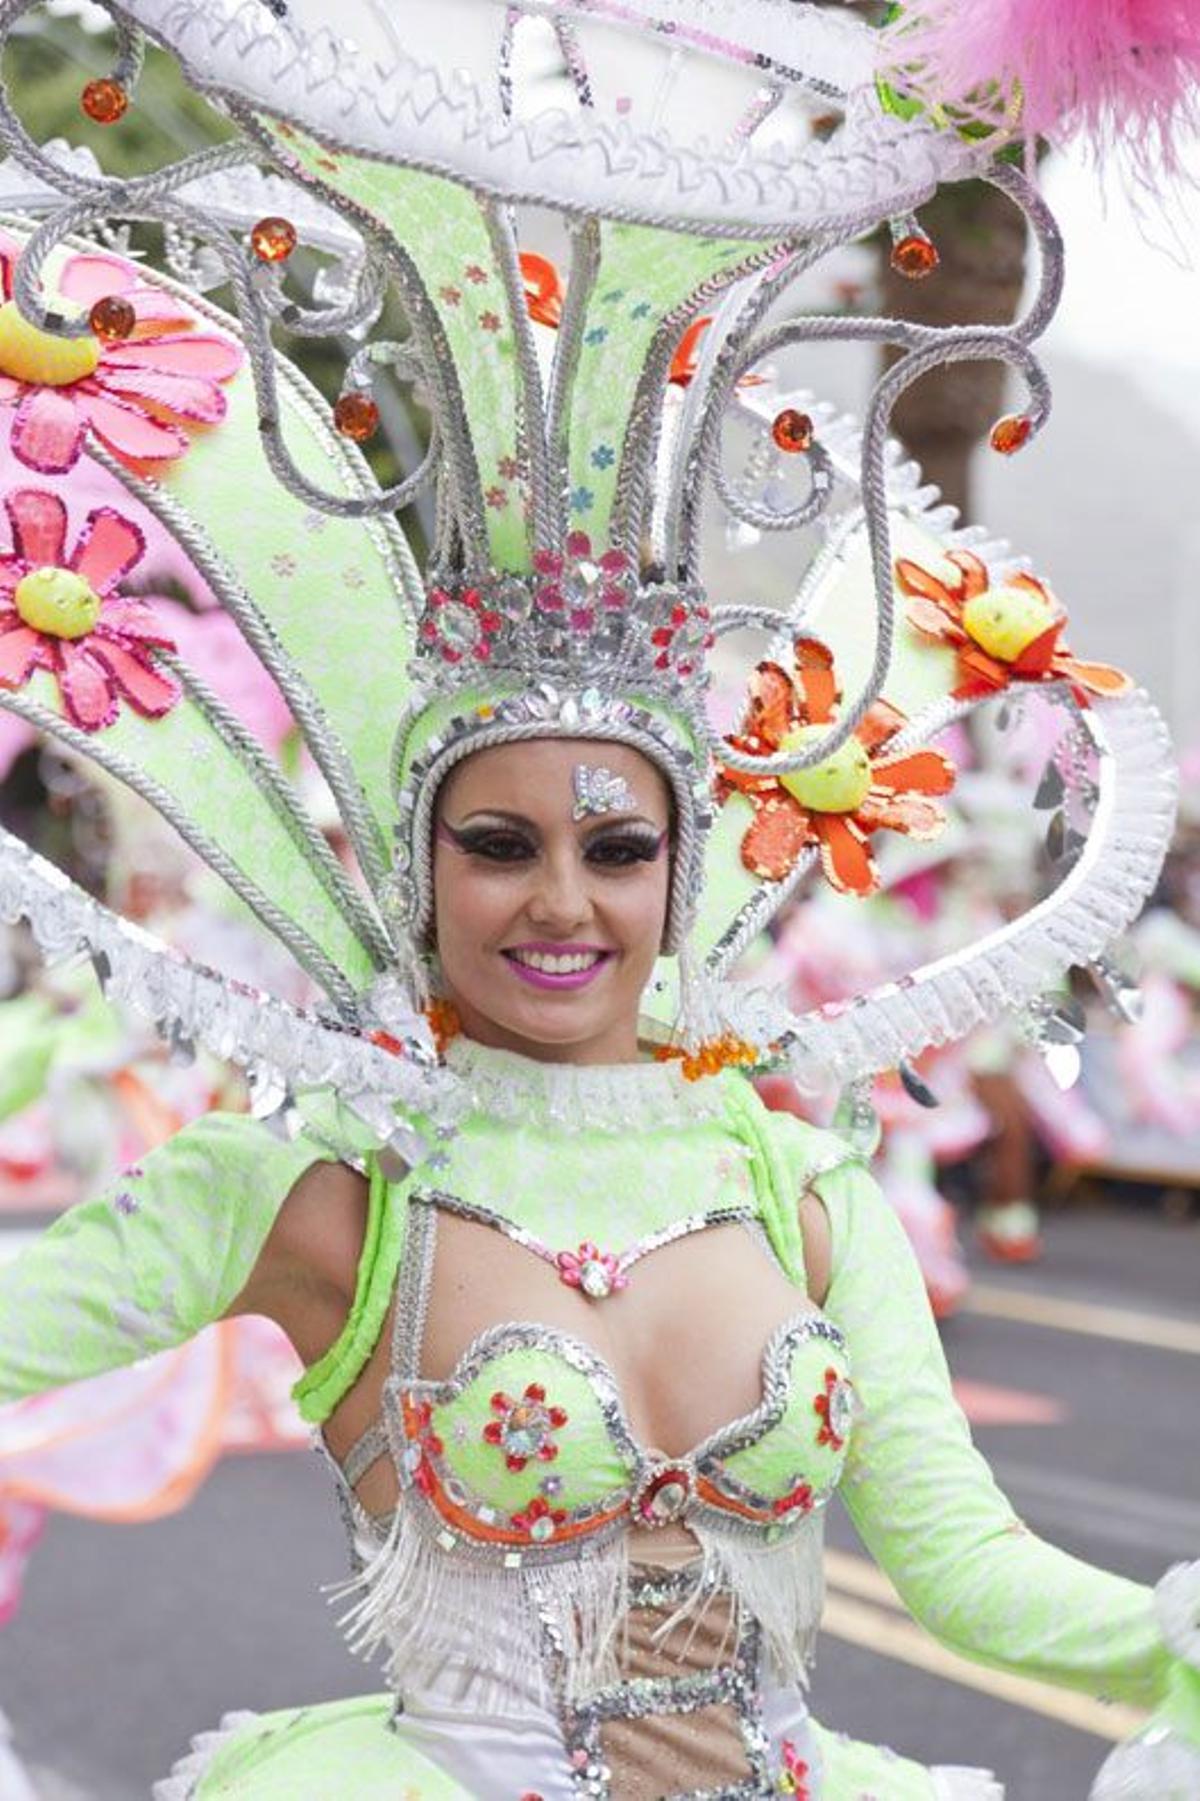 Carnaval, Europa, celebración, disfraz, viaje, fantasía, escapada, marzo, pasacalles